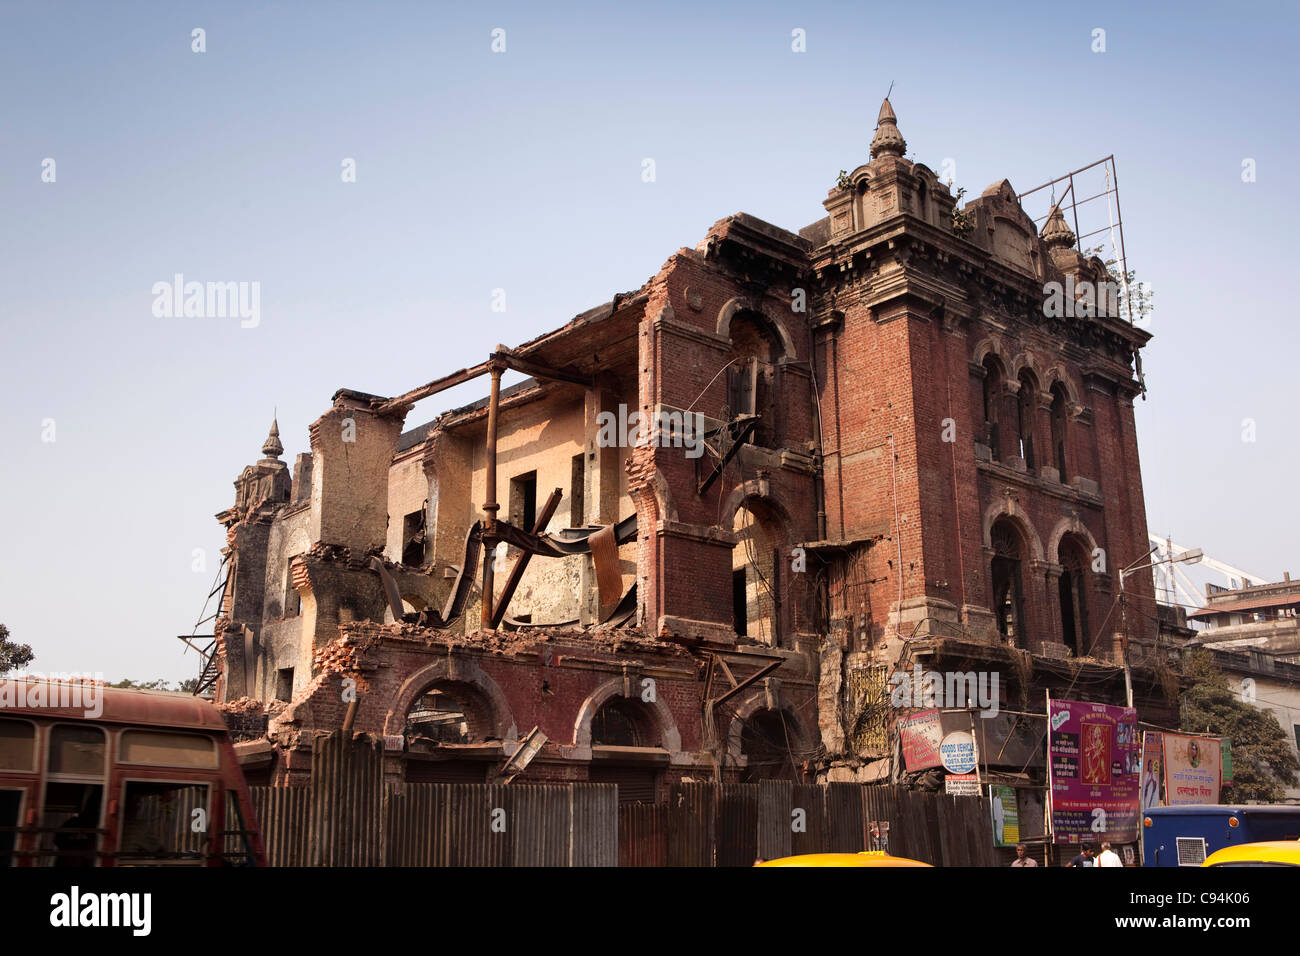 India, West Bengal, Kolkata, Strand Road, old colonial riverside warehouse being demolished Stock Photo